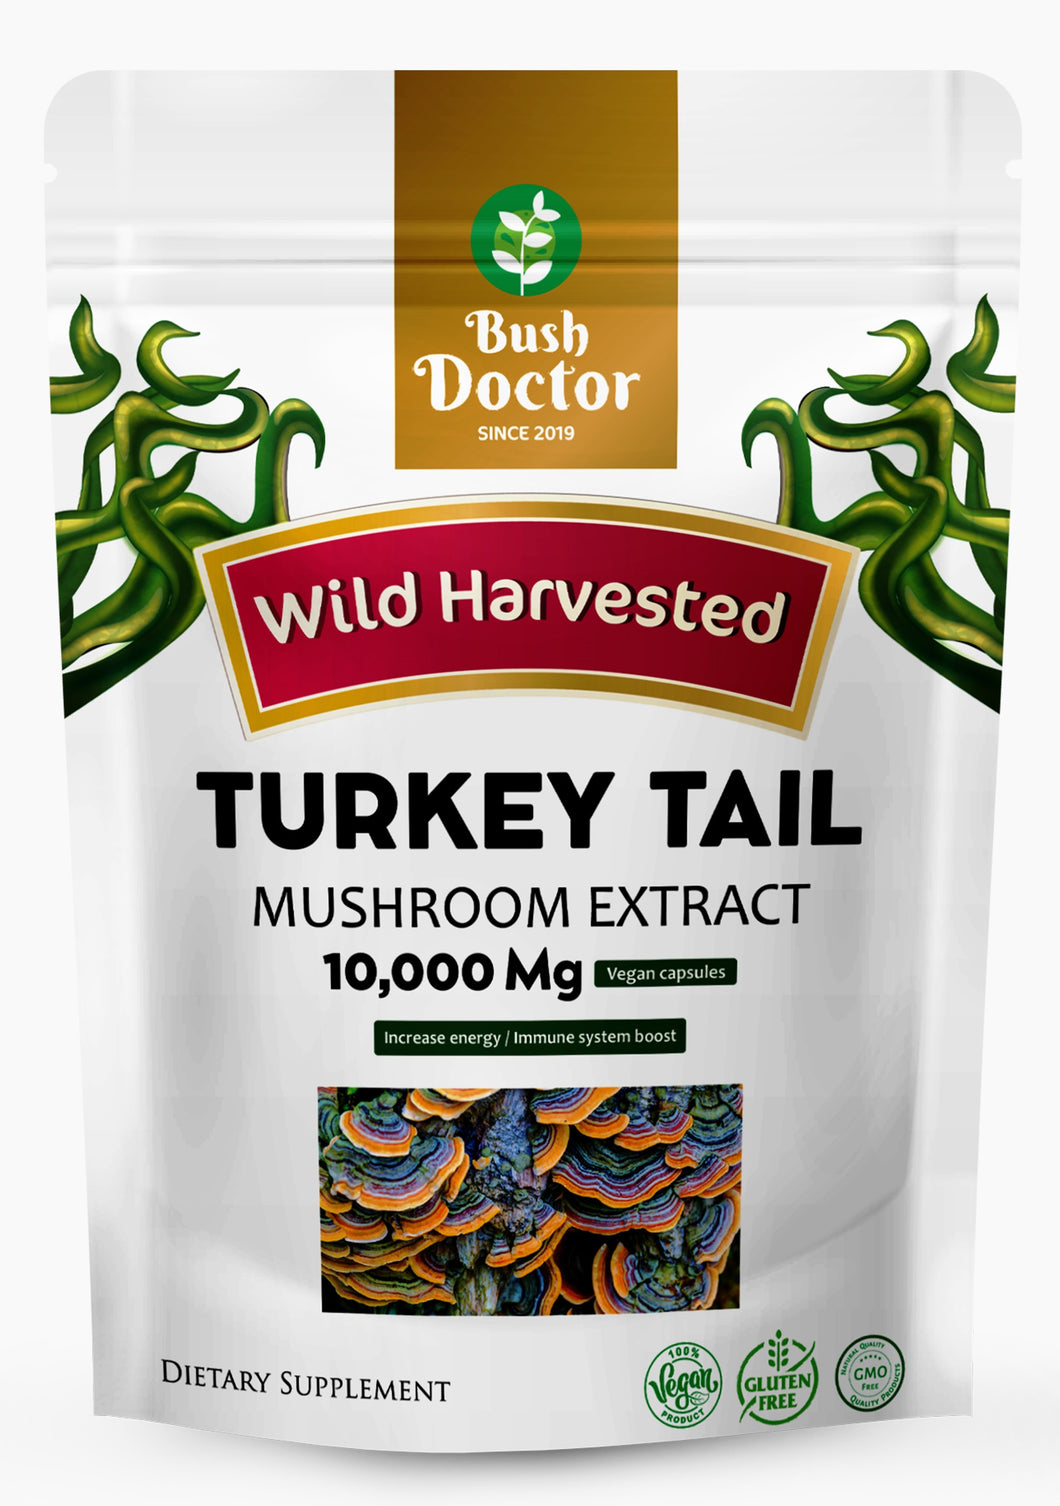 Turkey Tail Mushroom Extract Capsules 10,000mg - 150mg Polysaccharides STRONG